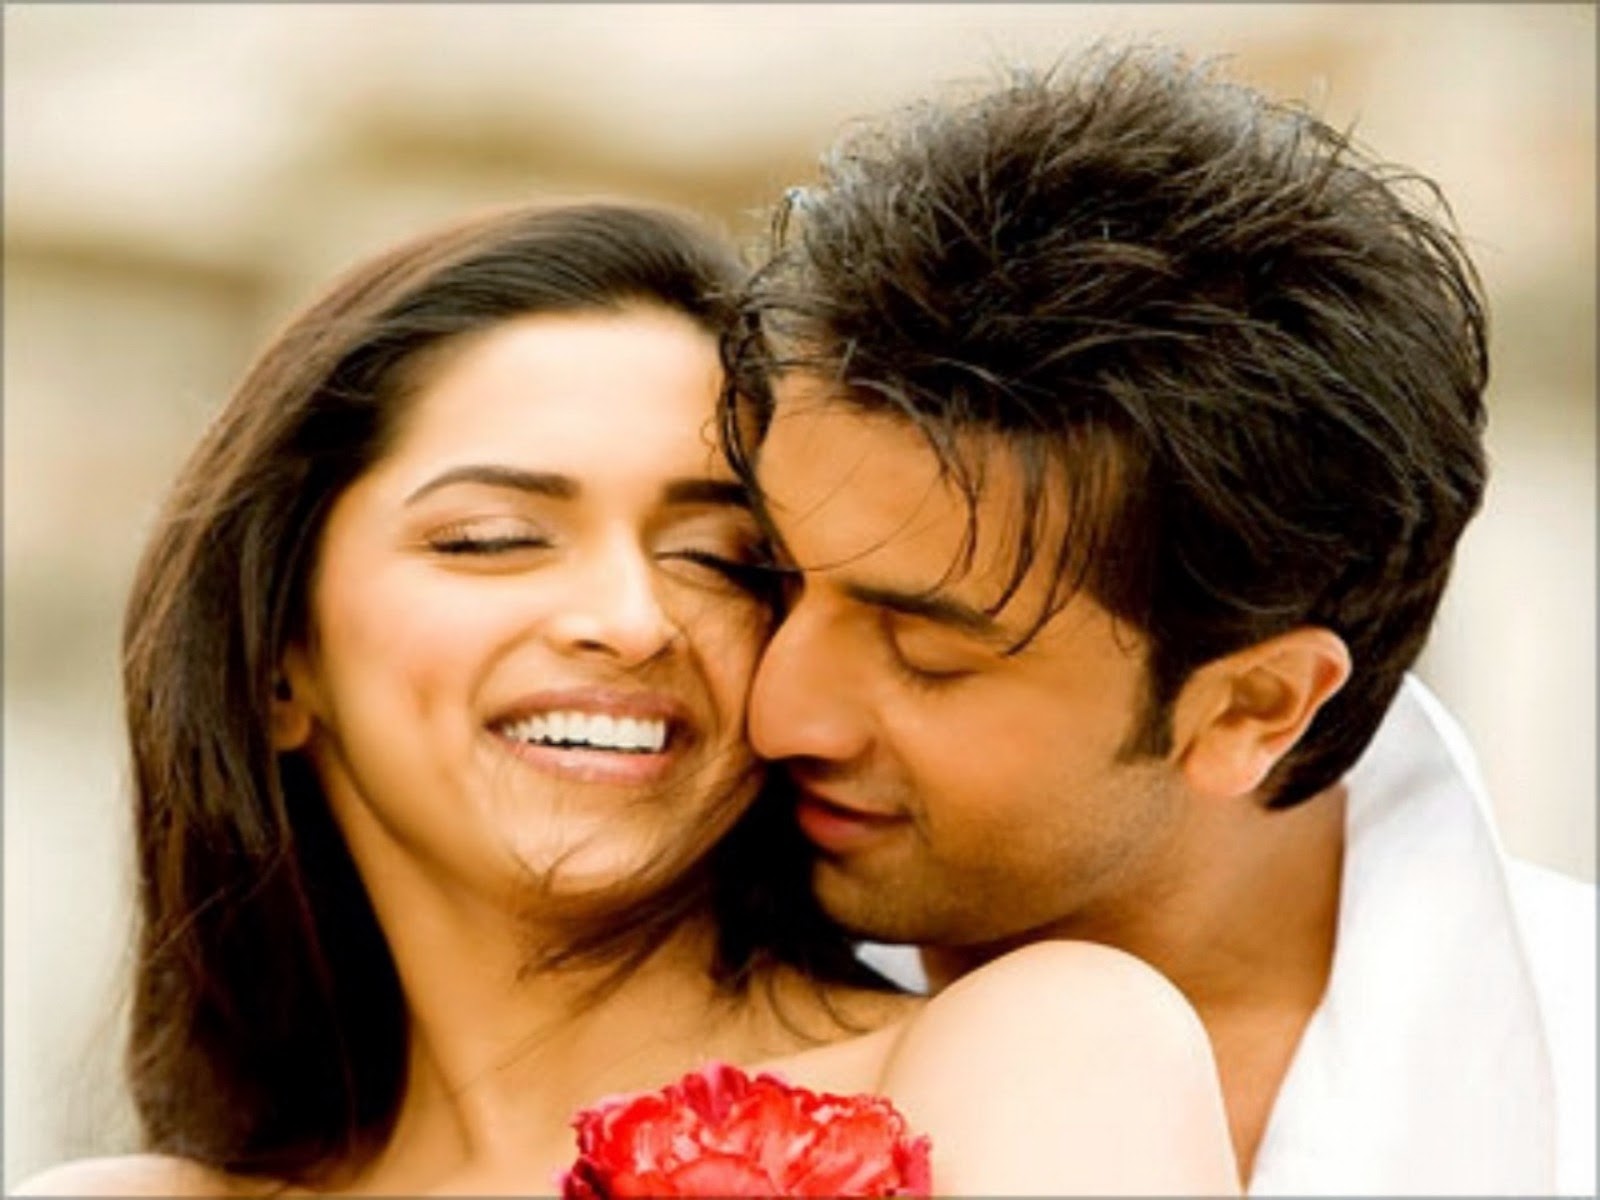 Deepika Padukone & Ranbir Kapoor Couple Free HD Wallpapers Download 